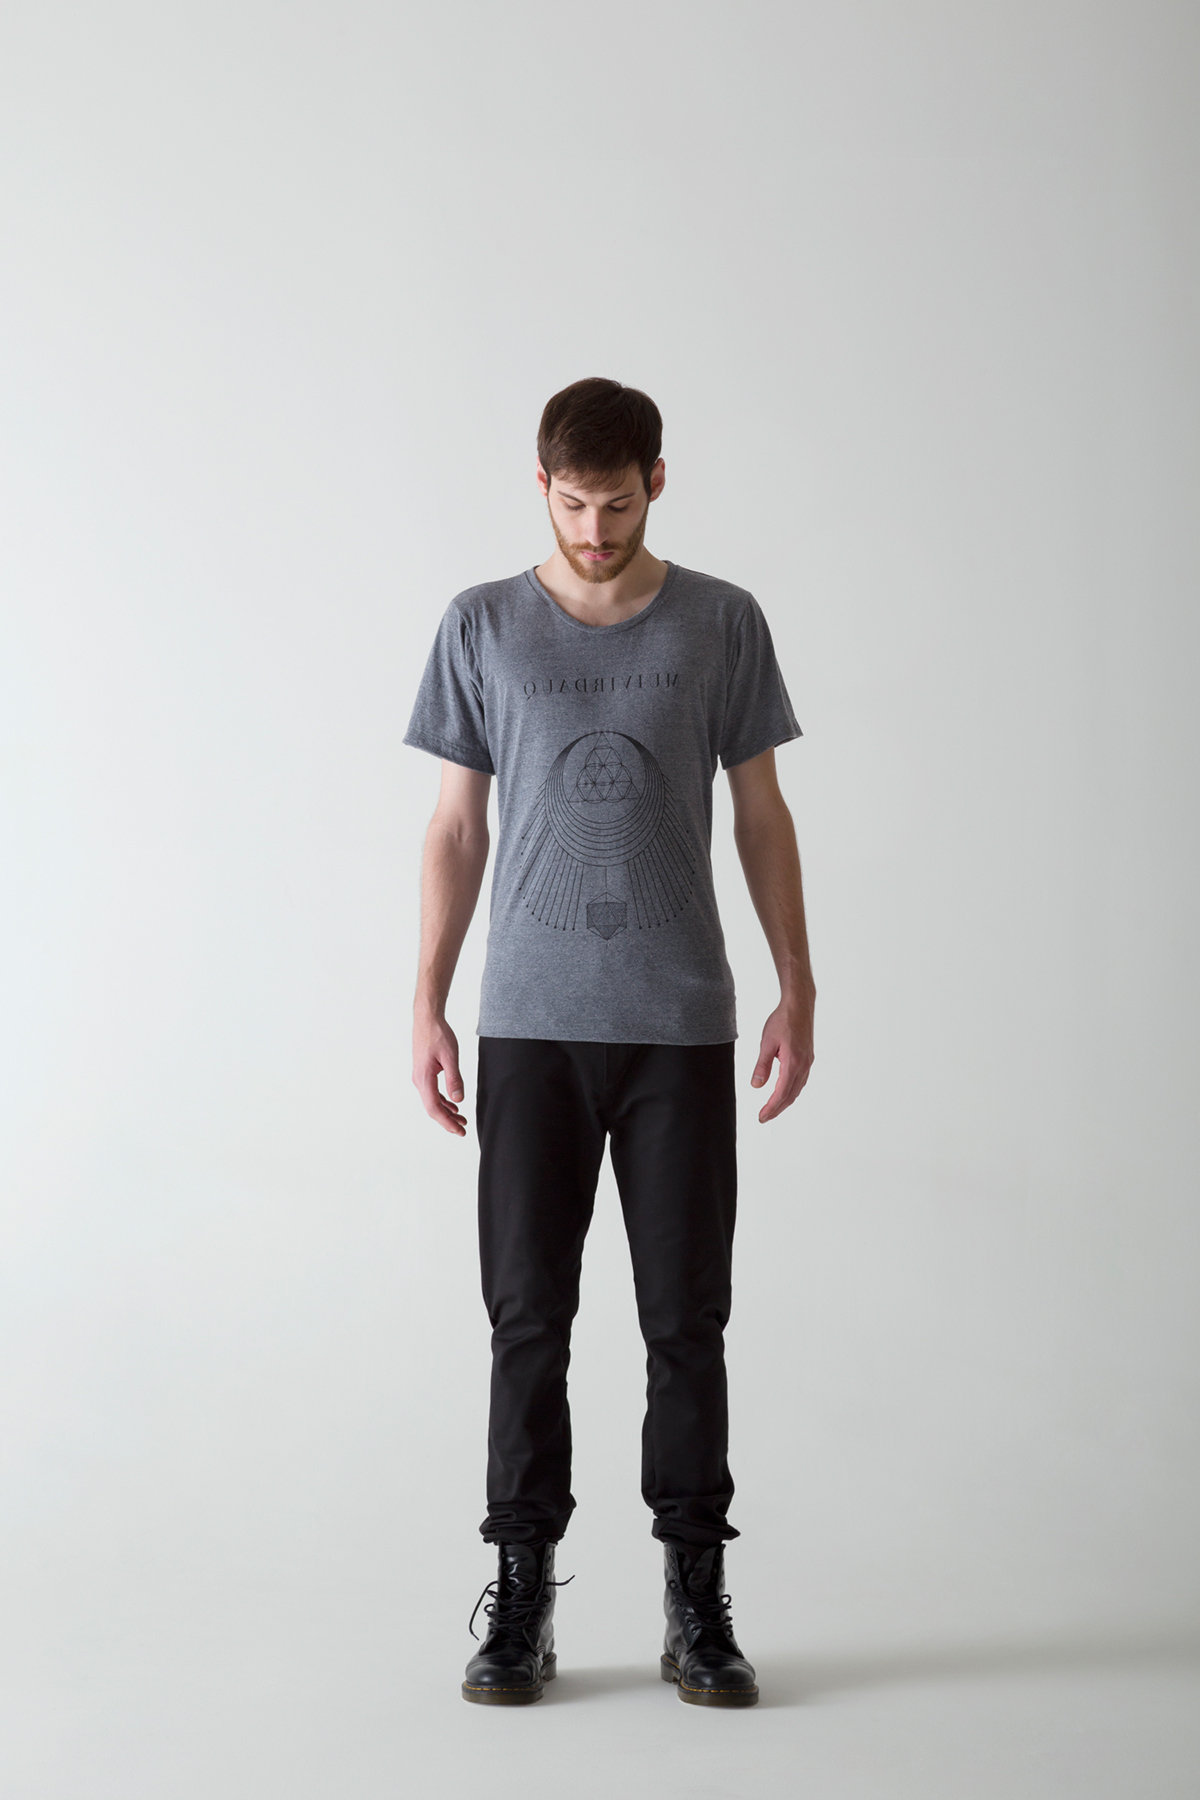 Quadrivium geometry triangle clothes black grey shirt tshirt poster styling 